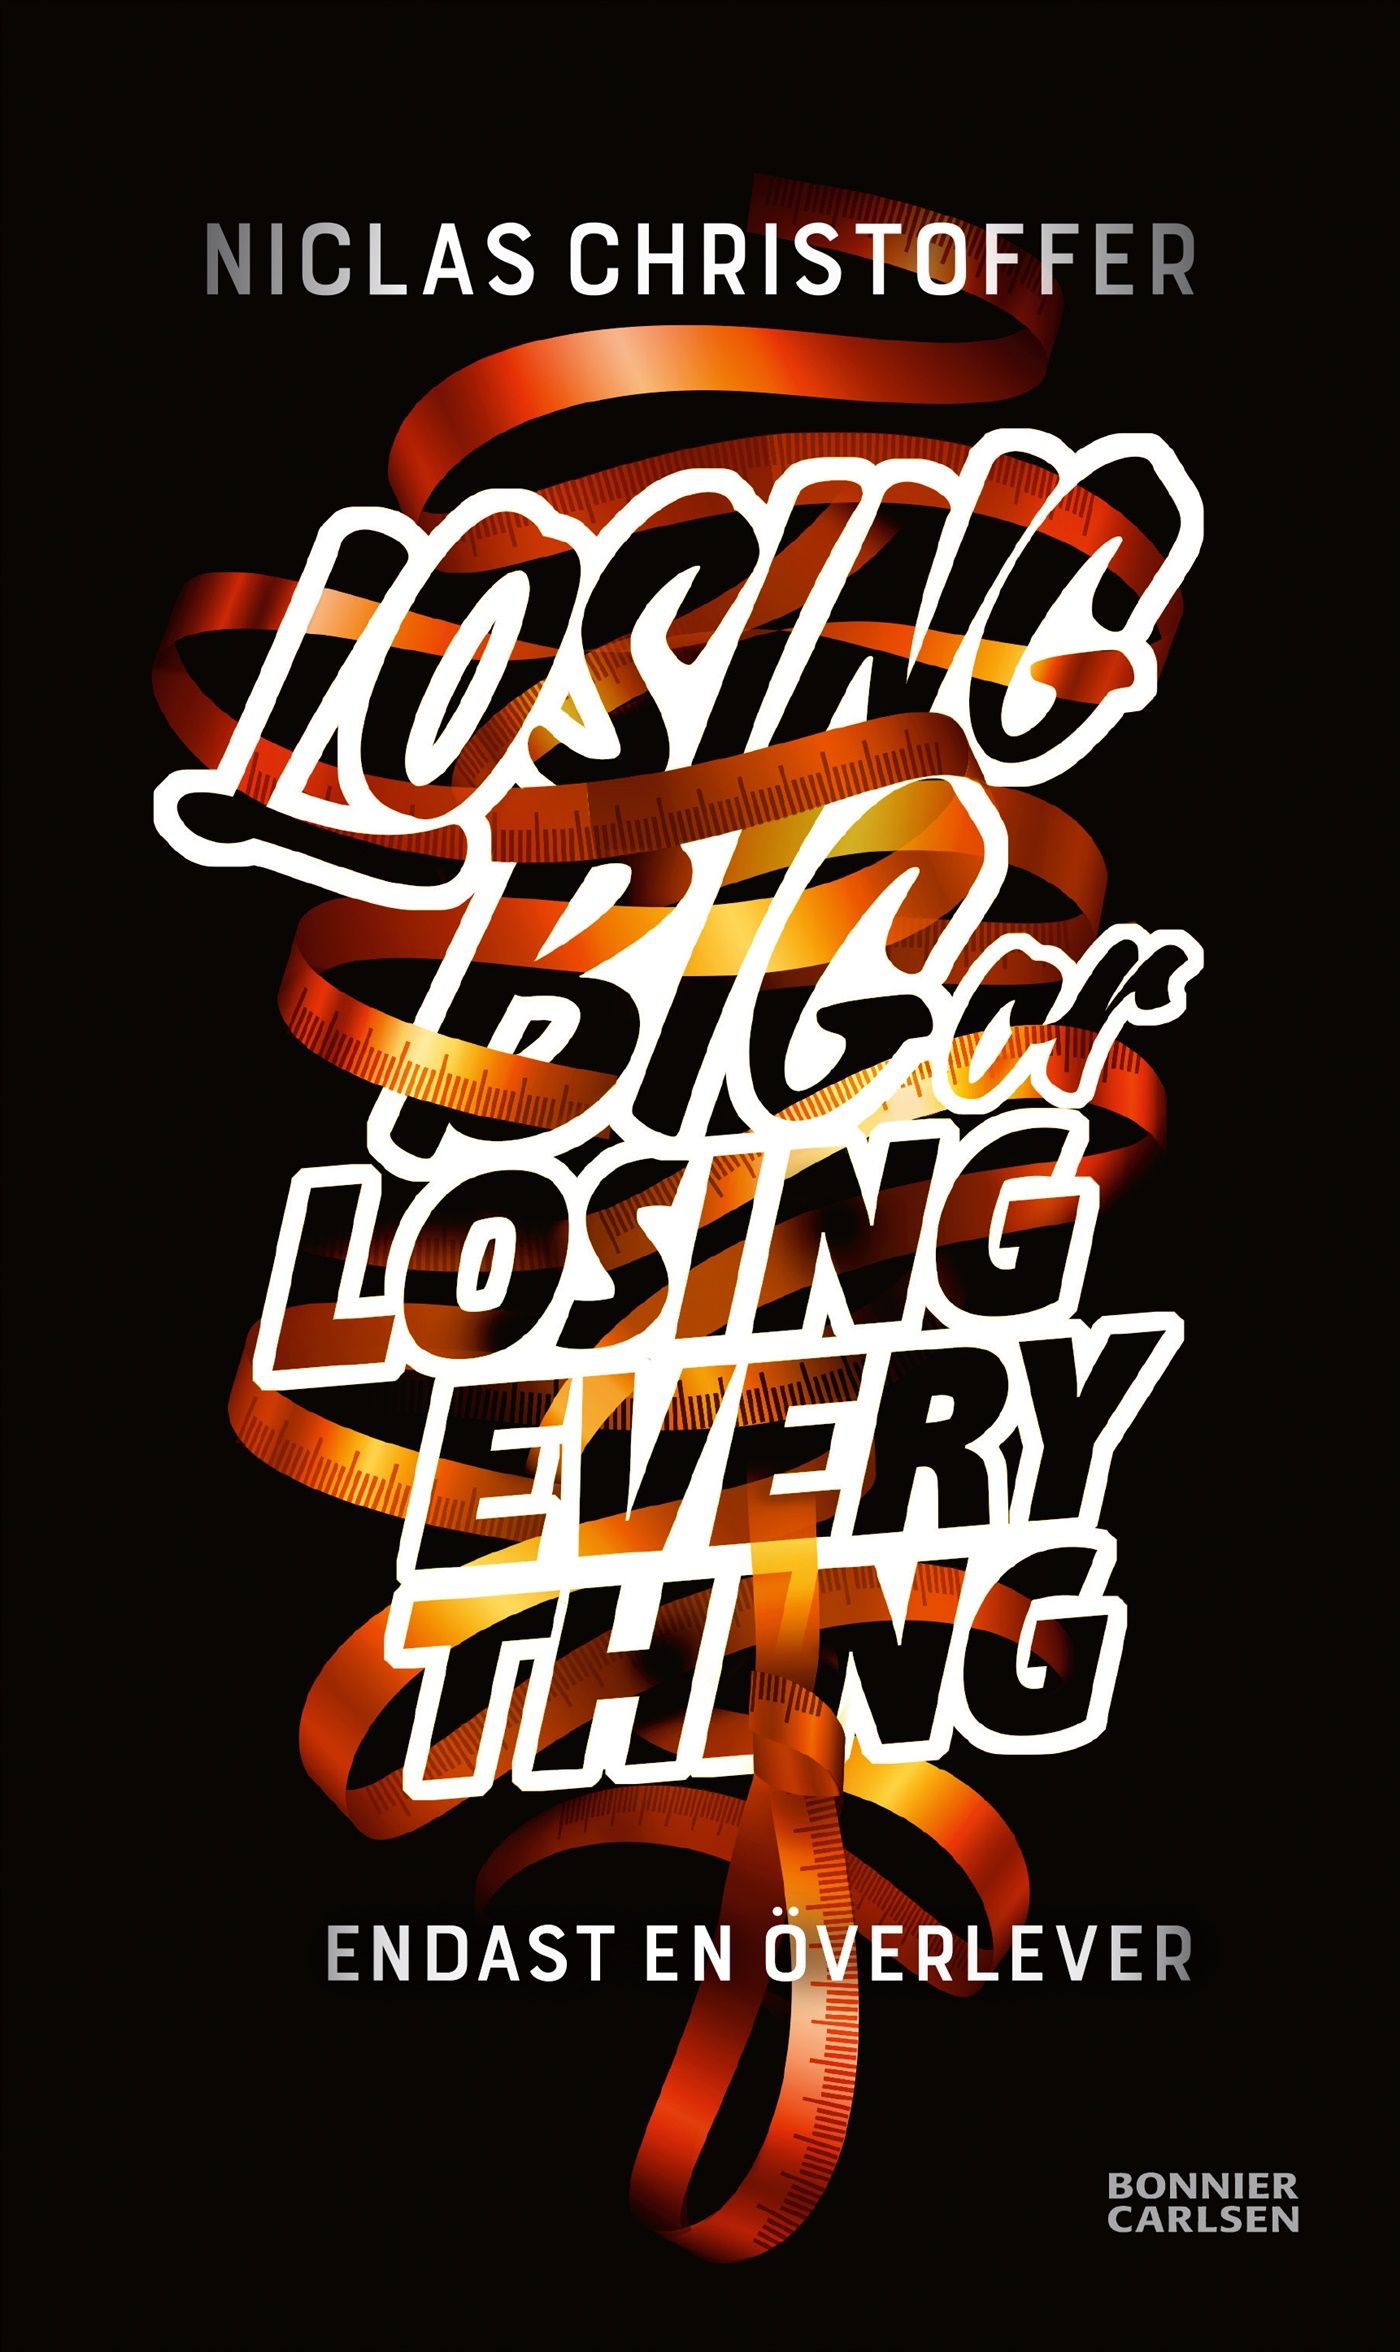 Losing big or losing everything, eBook by Niclas Christoffer